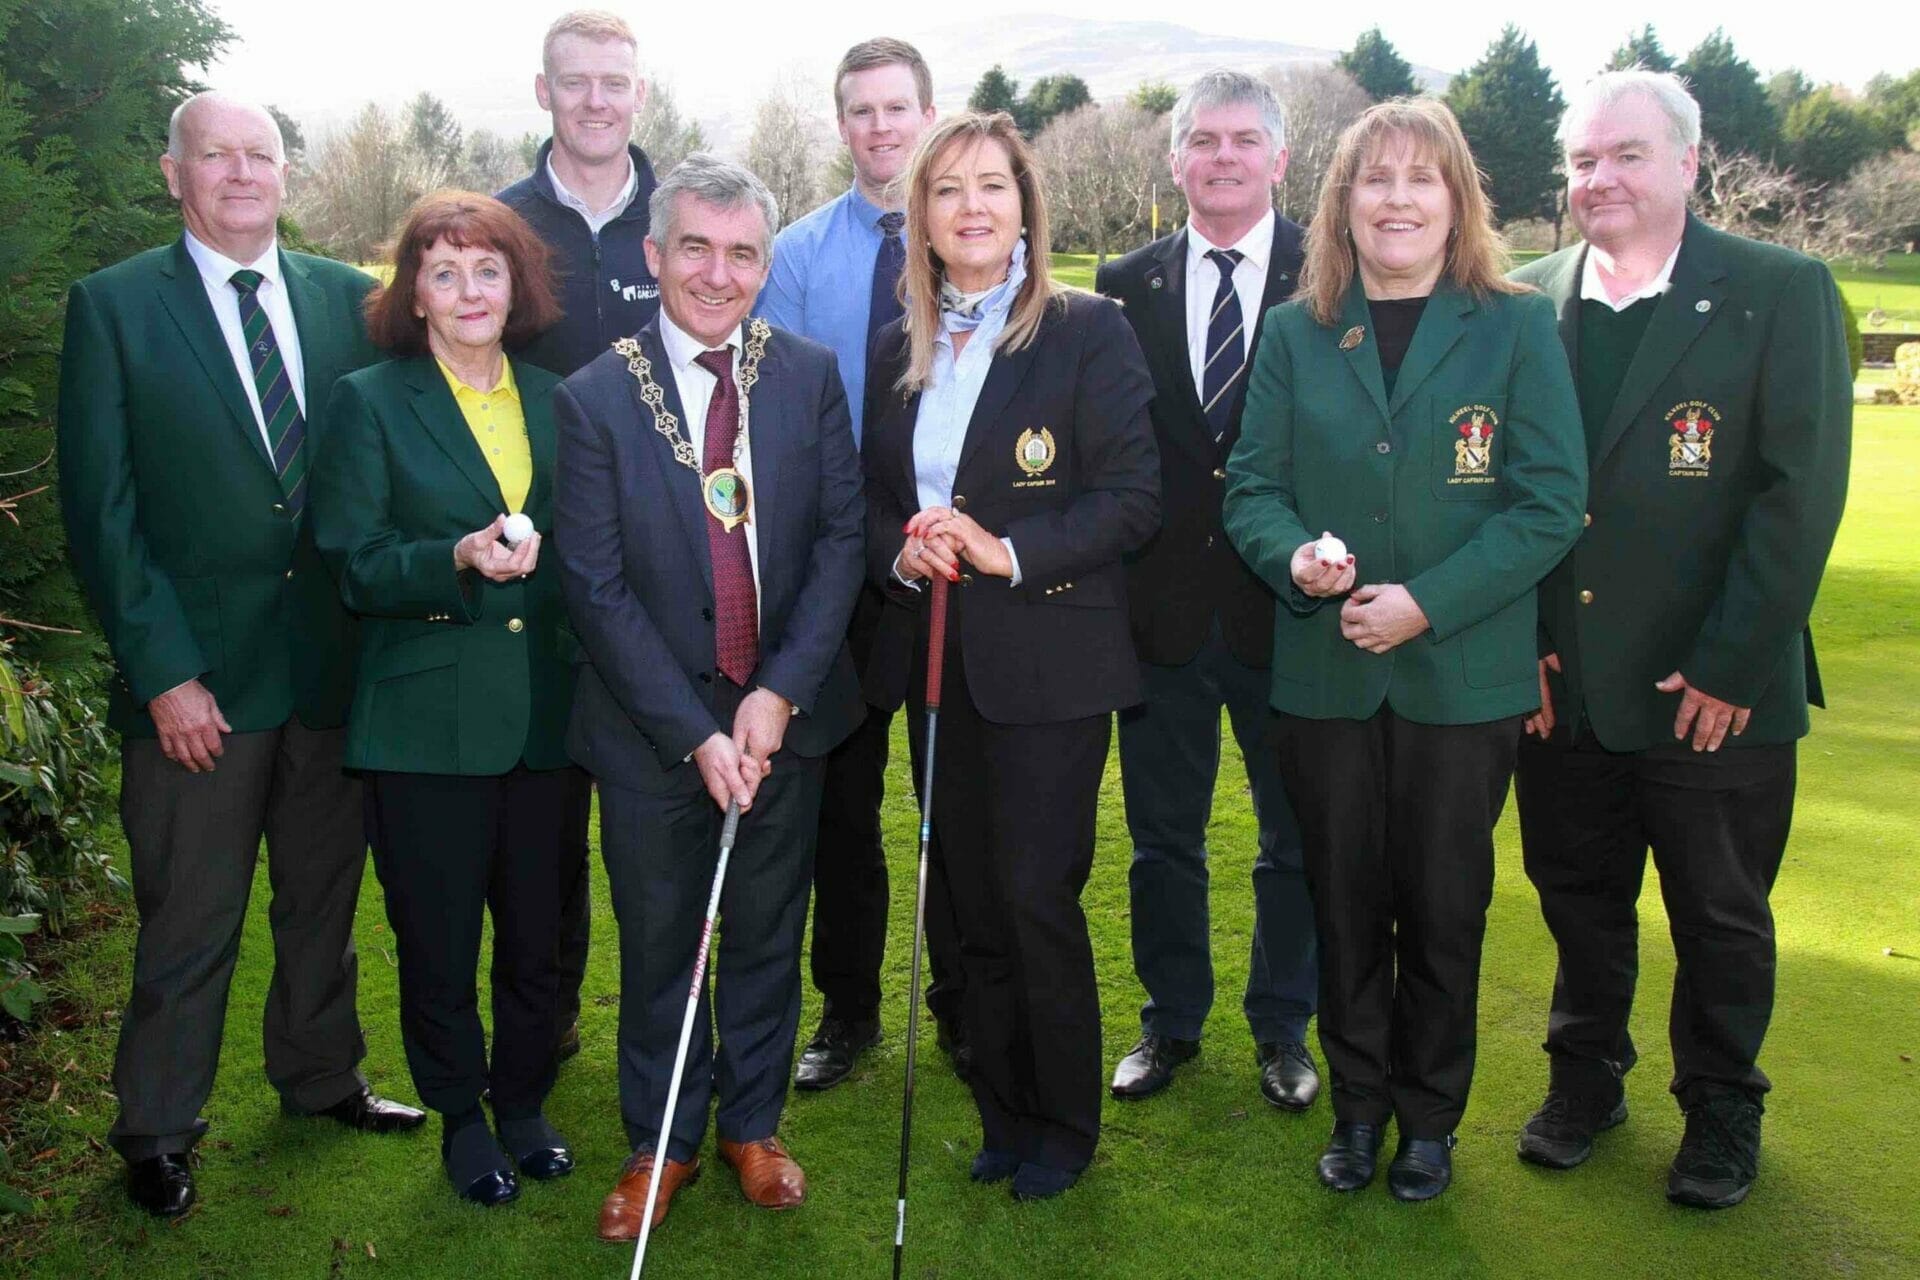 Carlingford Lough Golf Classic returns to the calendar